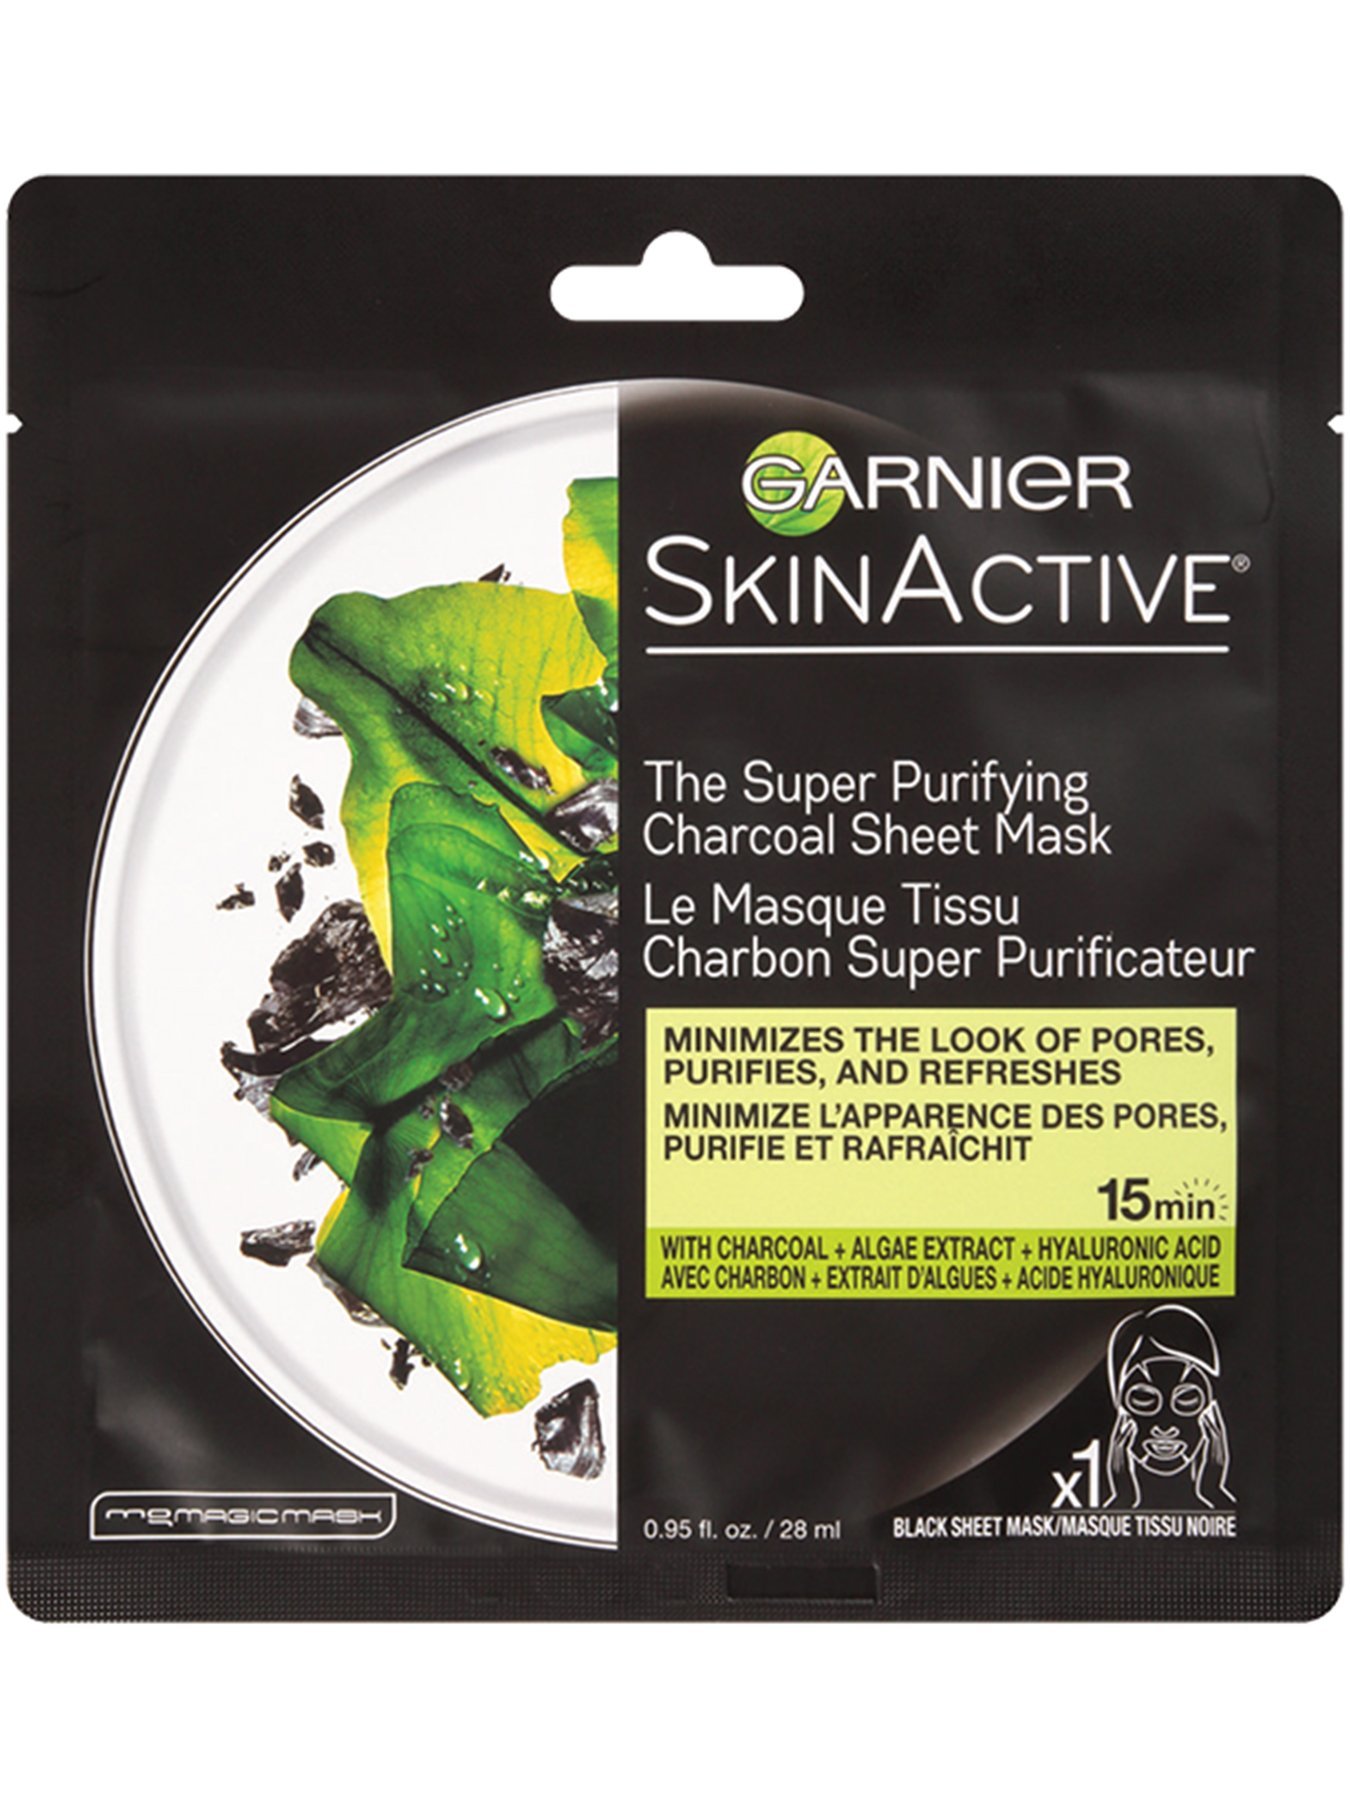 Garnier skinactive charcoal mask